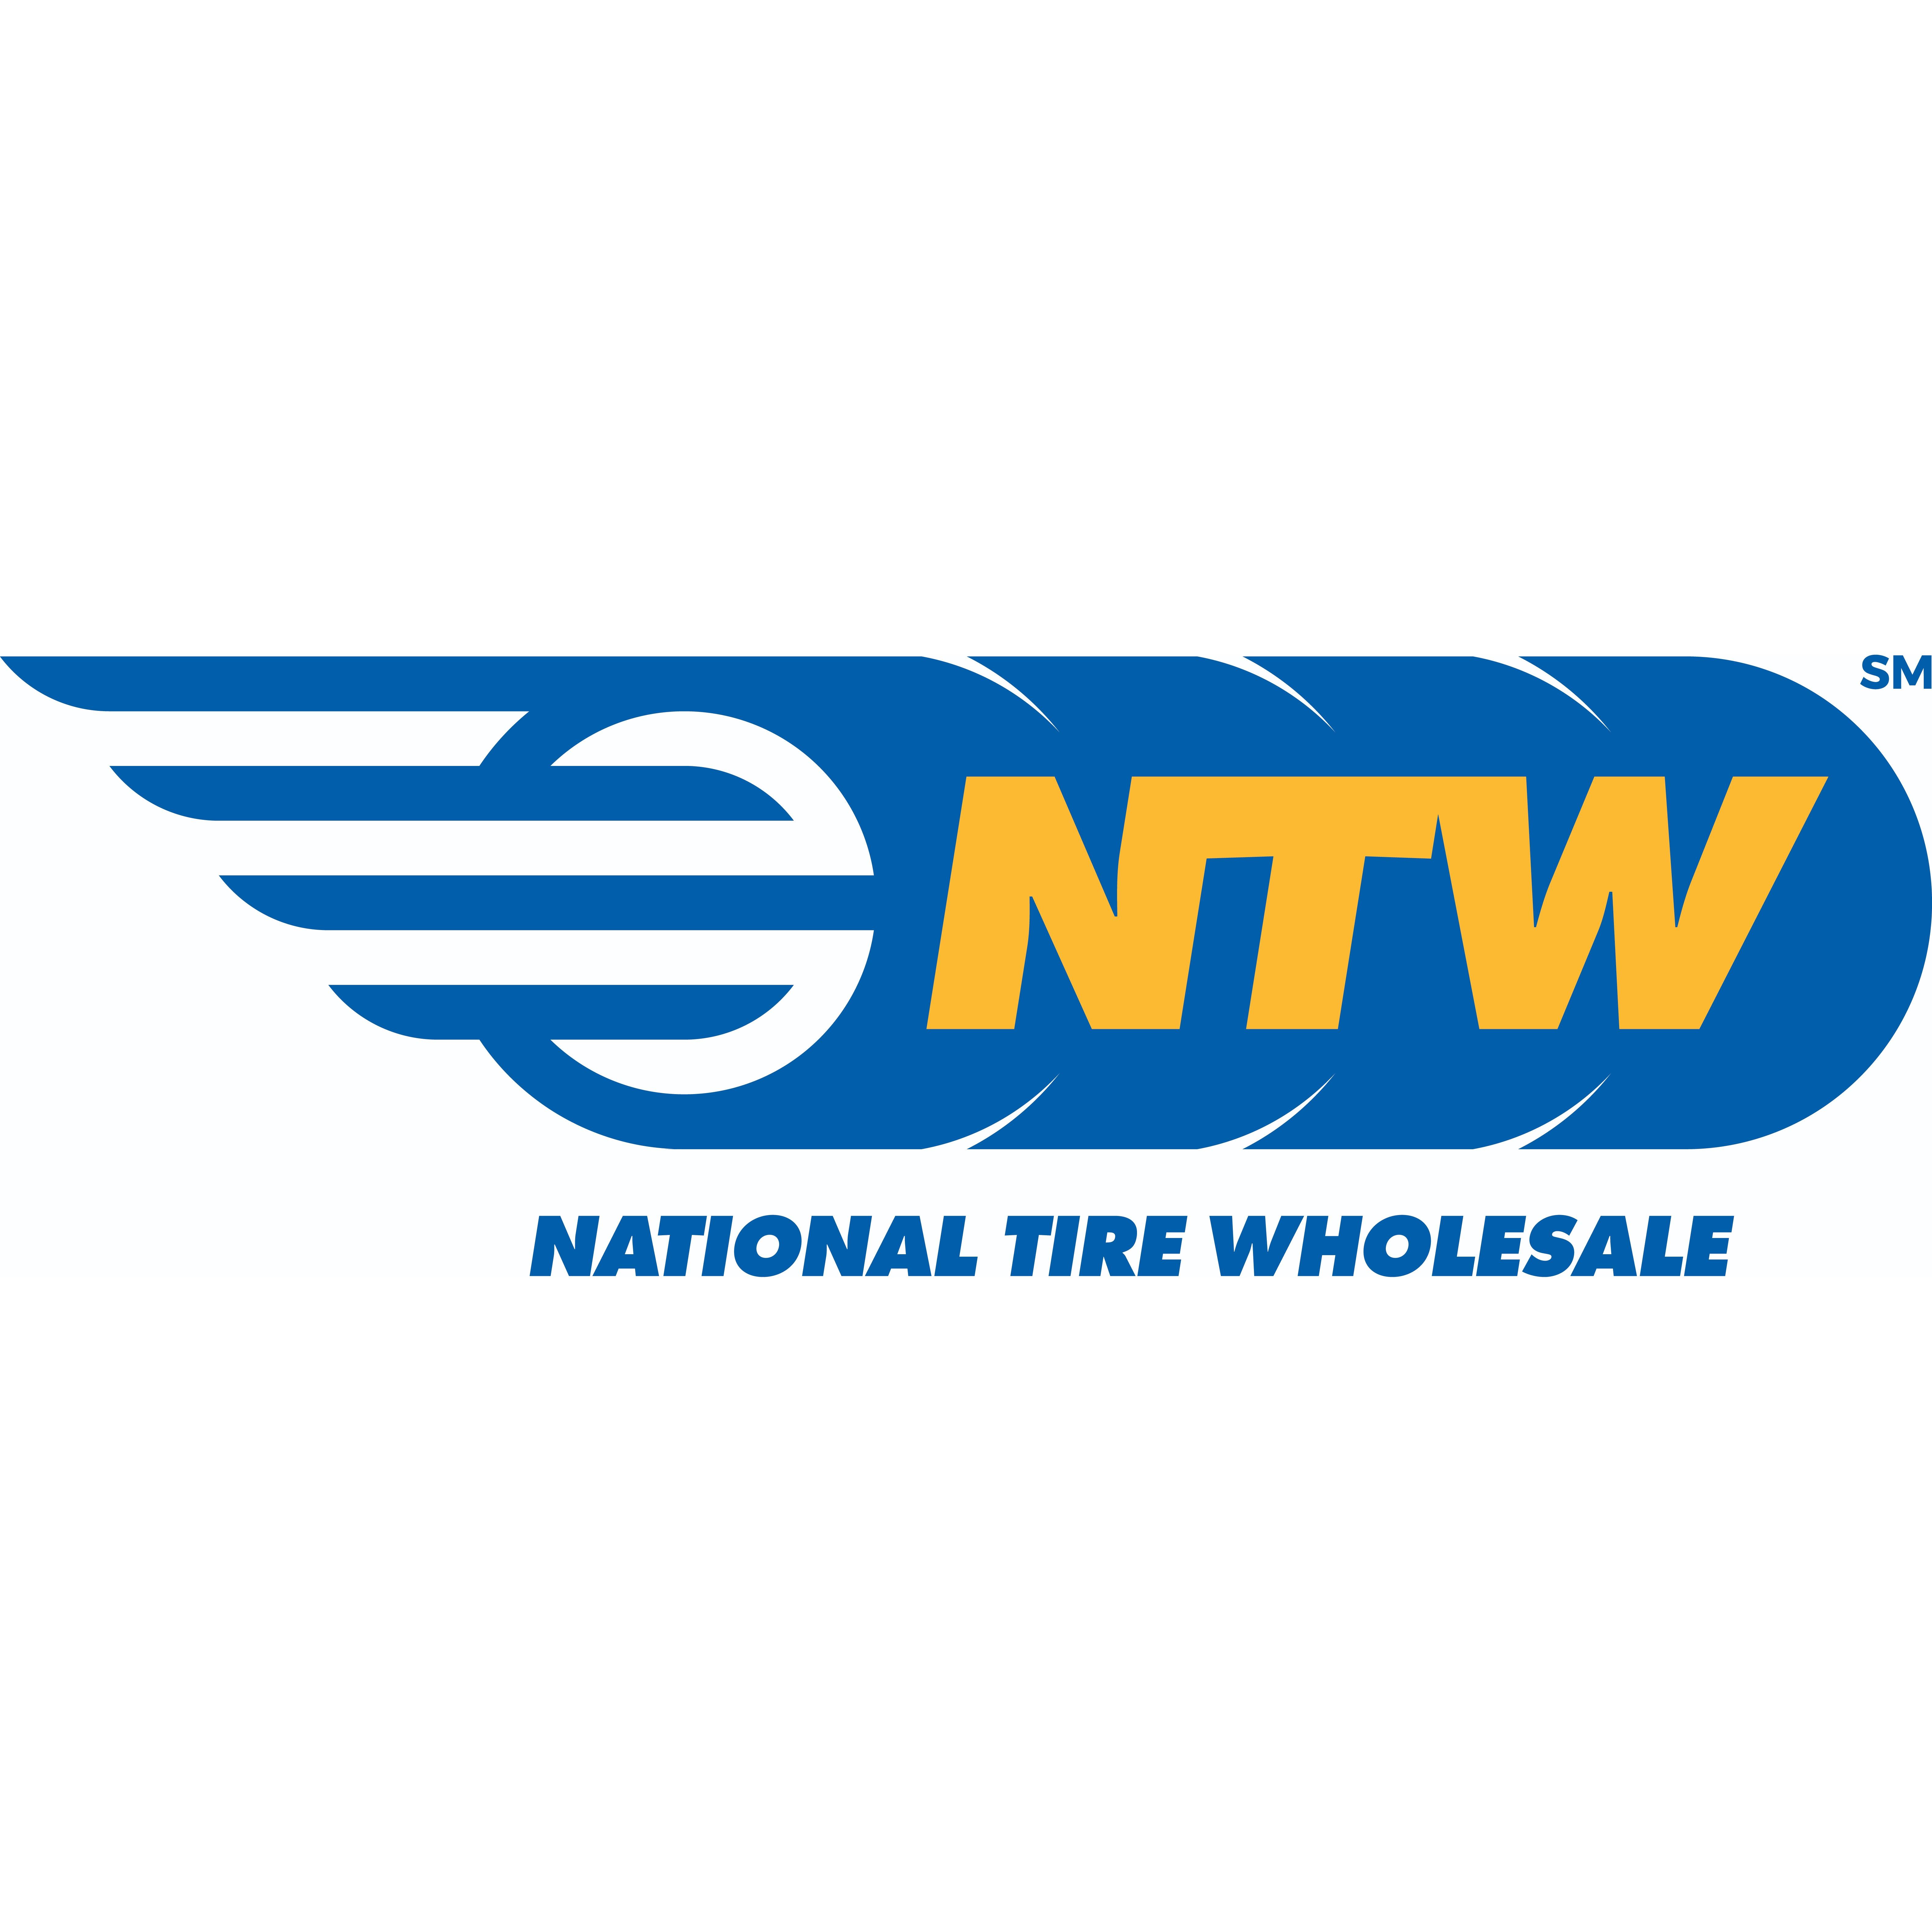 NTW - National Tire Wholesale Logo